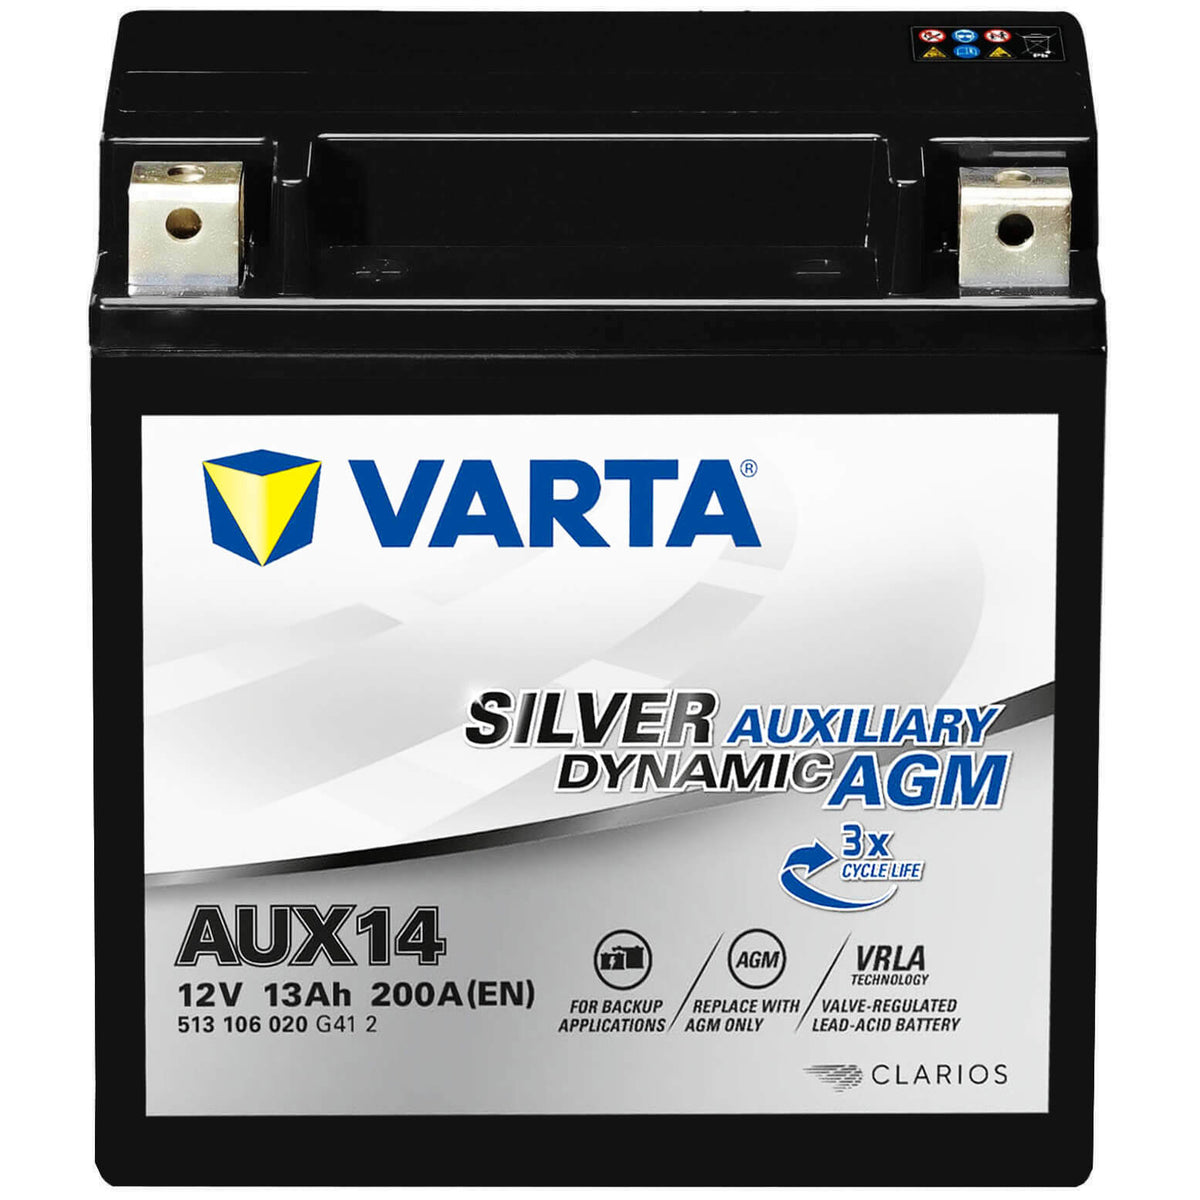 Varta AUX14 Silver Dynamic Auxiliary AGM 12V 13Ah 200A/EN